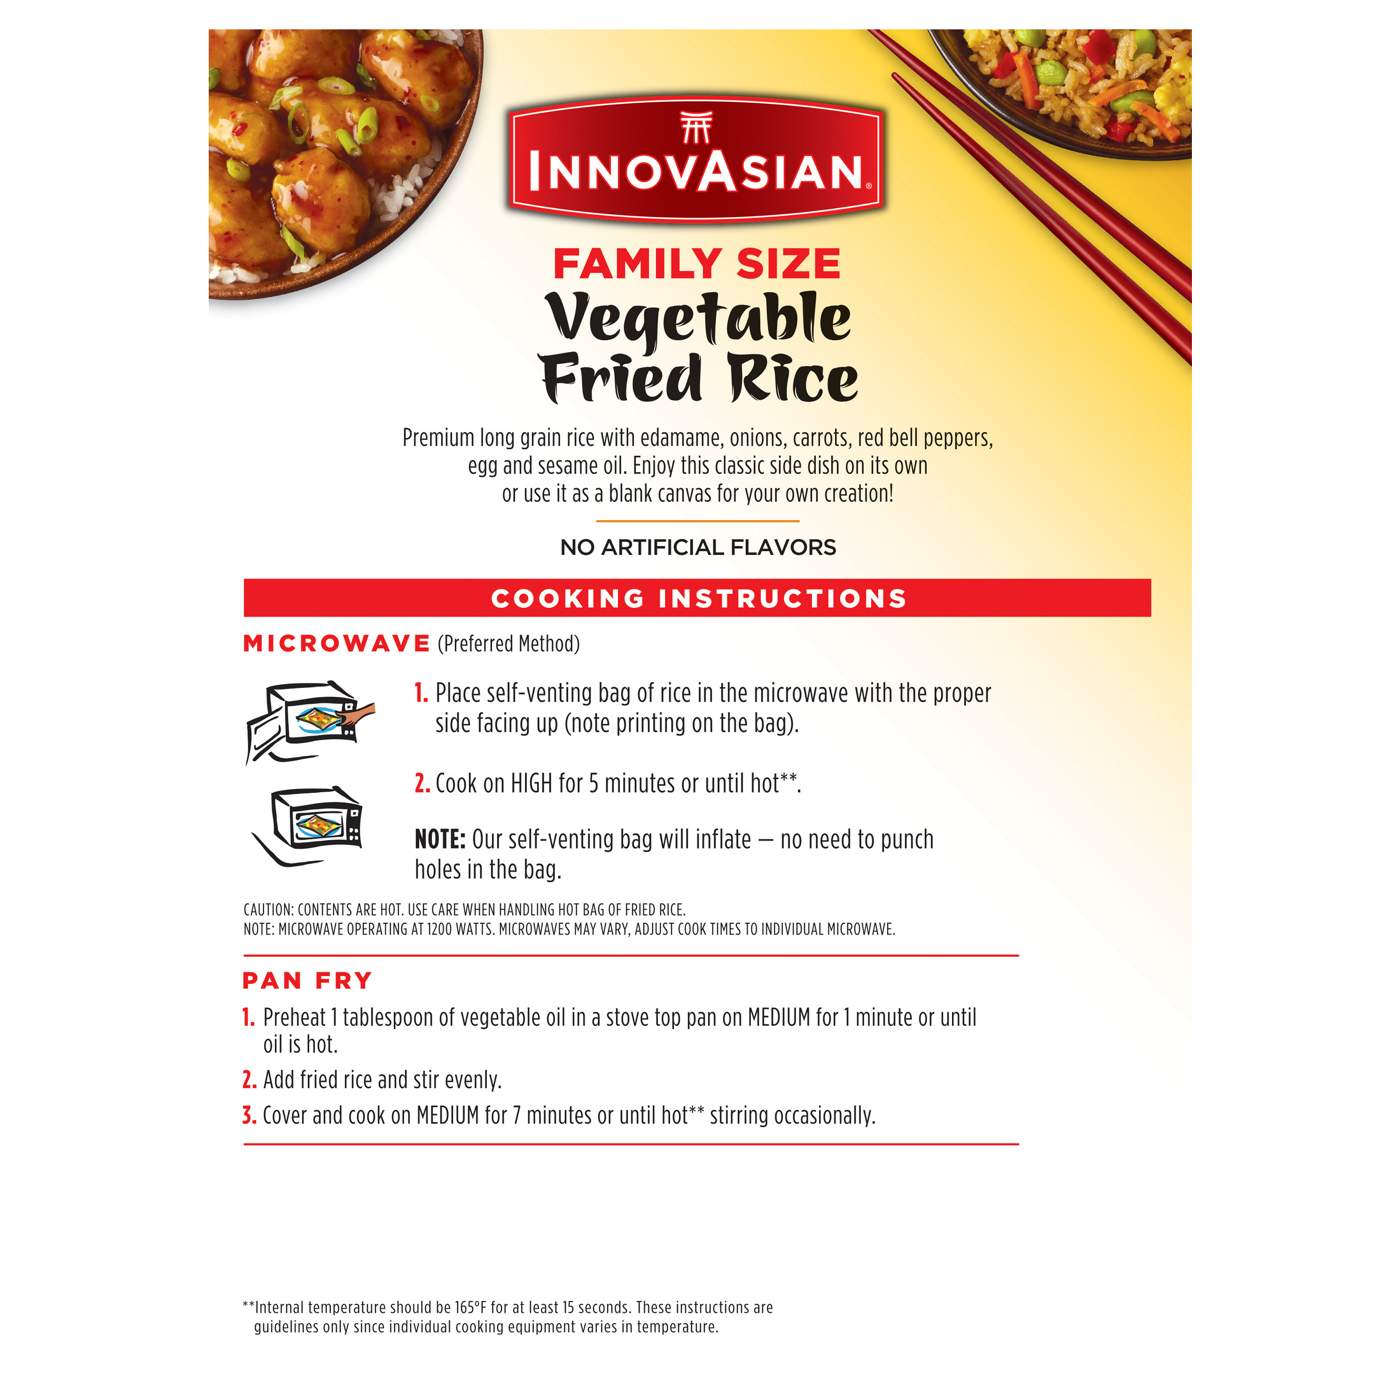 InnovAsian Frozen Vegetable Fried Rice - Family-Size; image 2 of 8